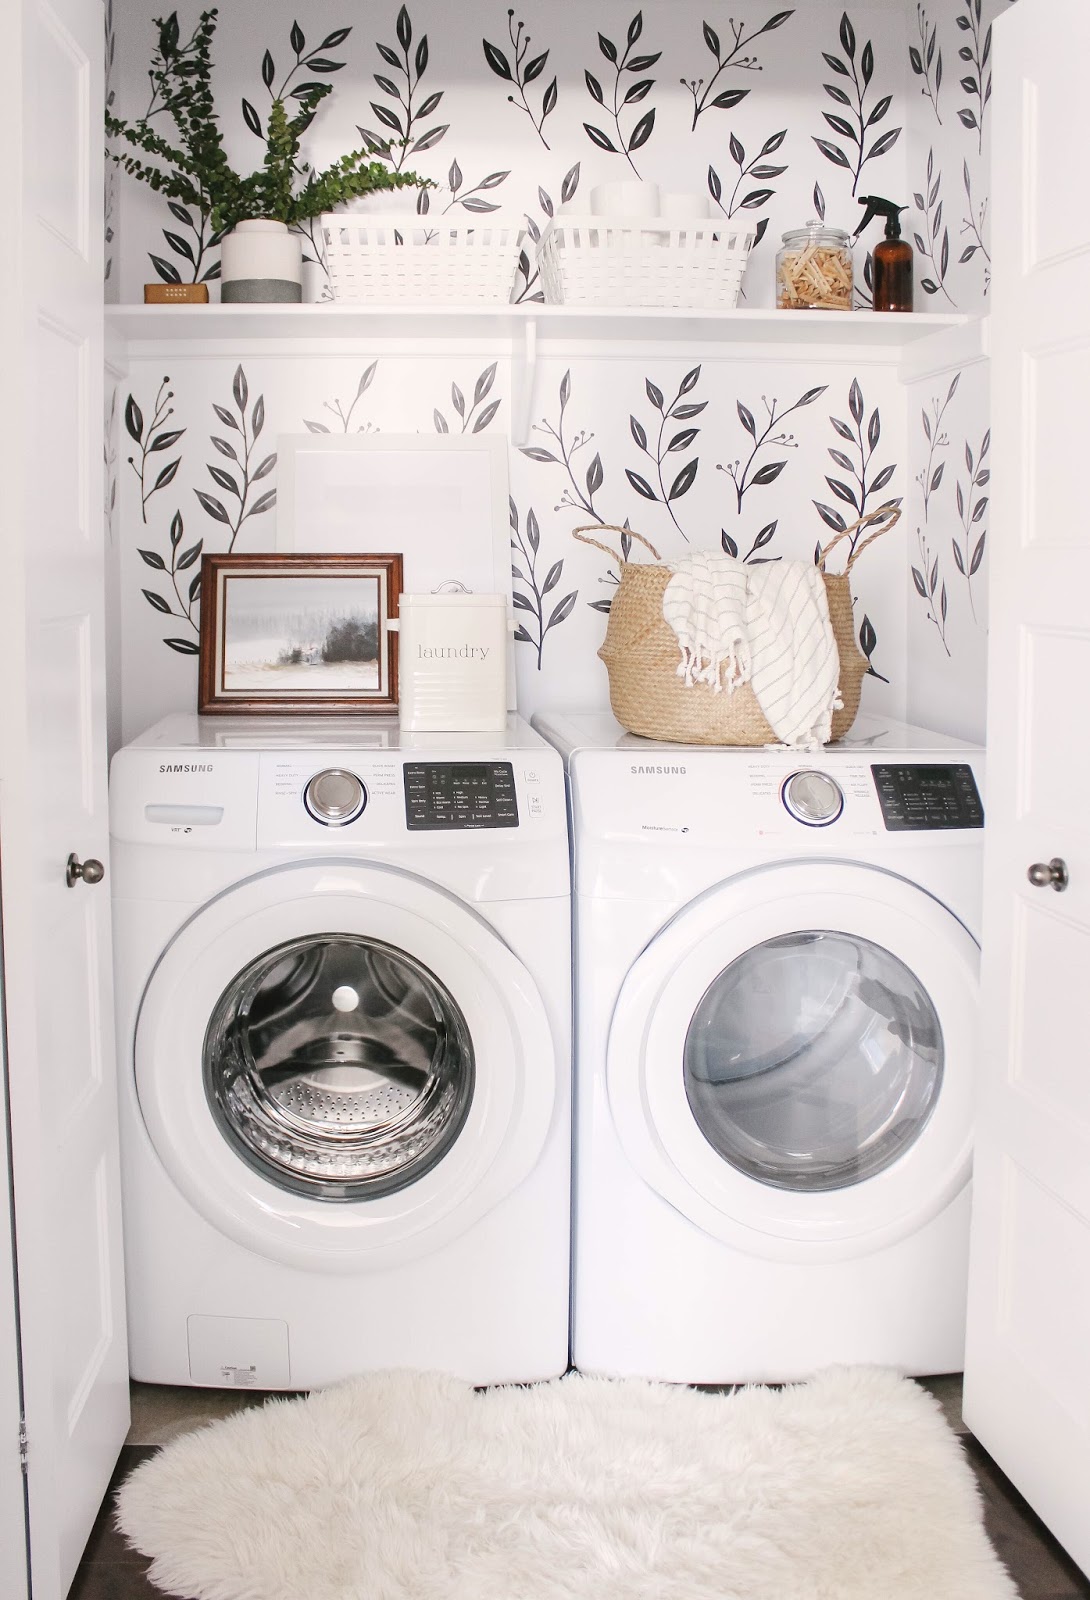 Our Closet Laundry Room Reveal + Ideas - Studio DIY